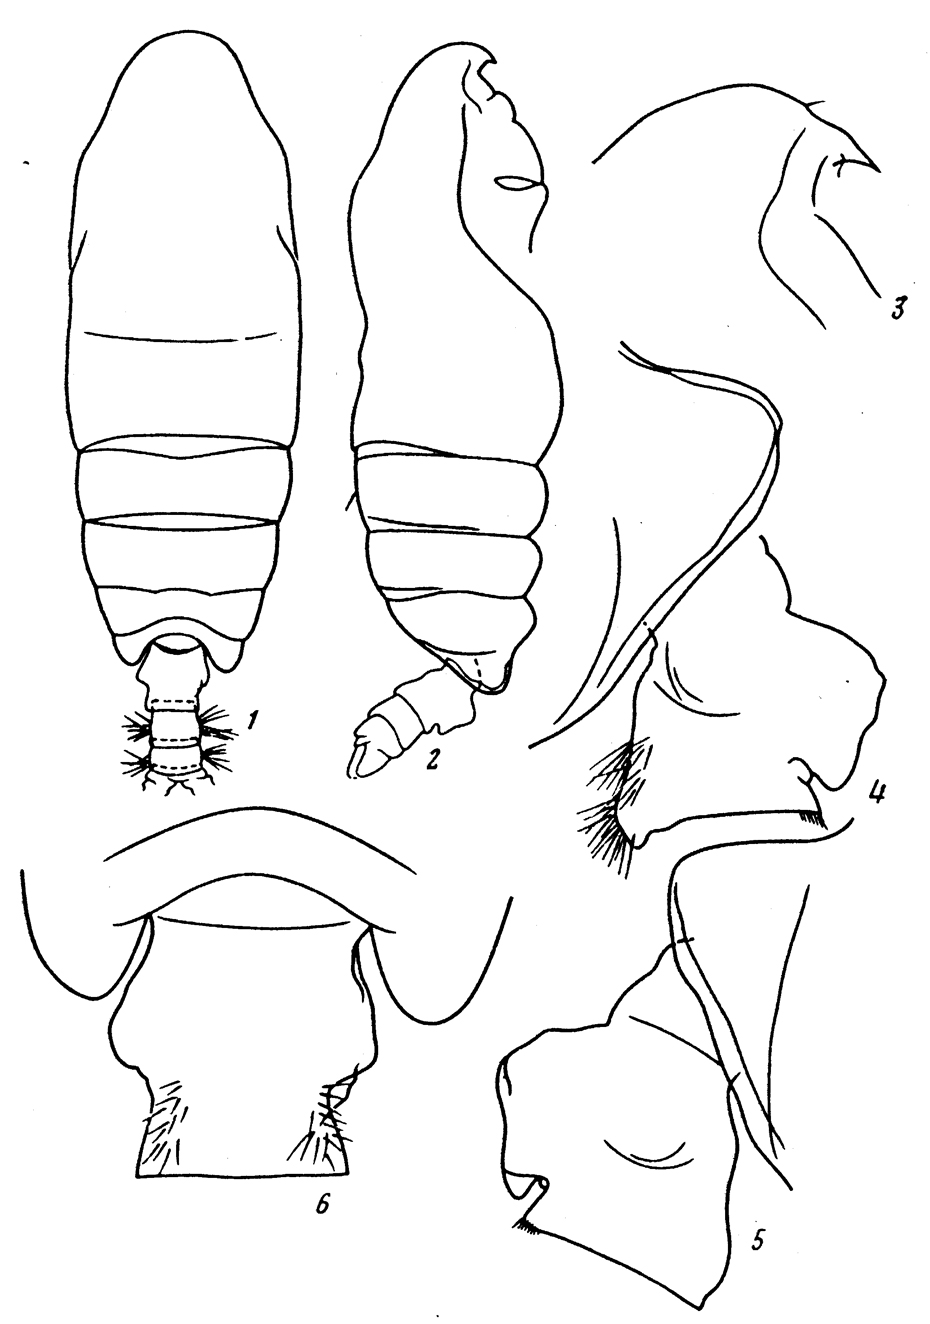 Espce Pseudochirella bowmani - Planche 2 de figures morphologiques